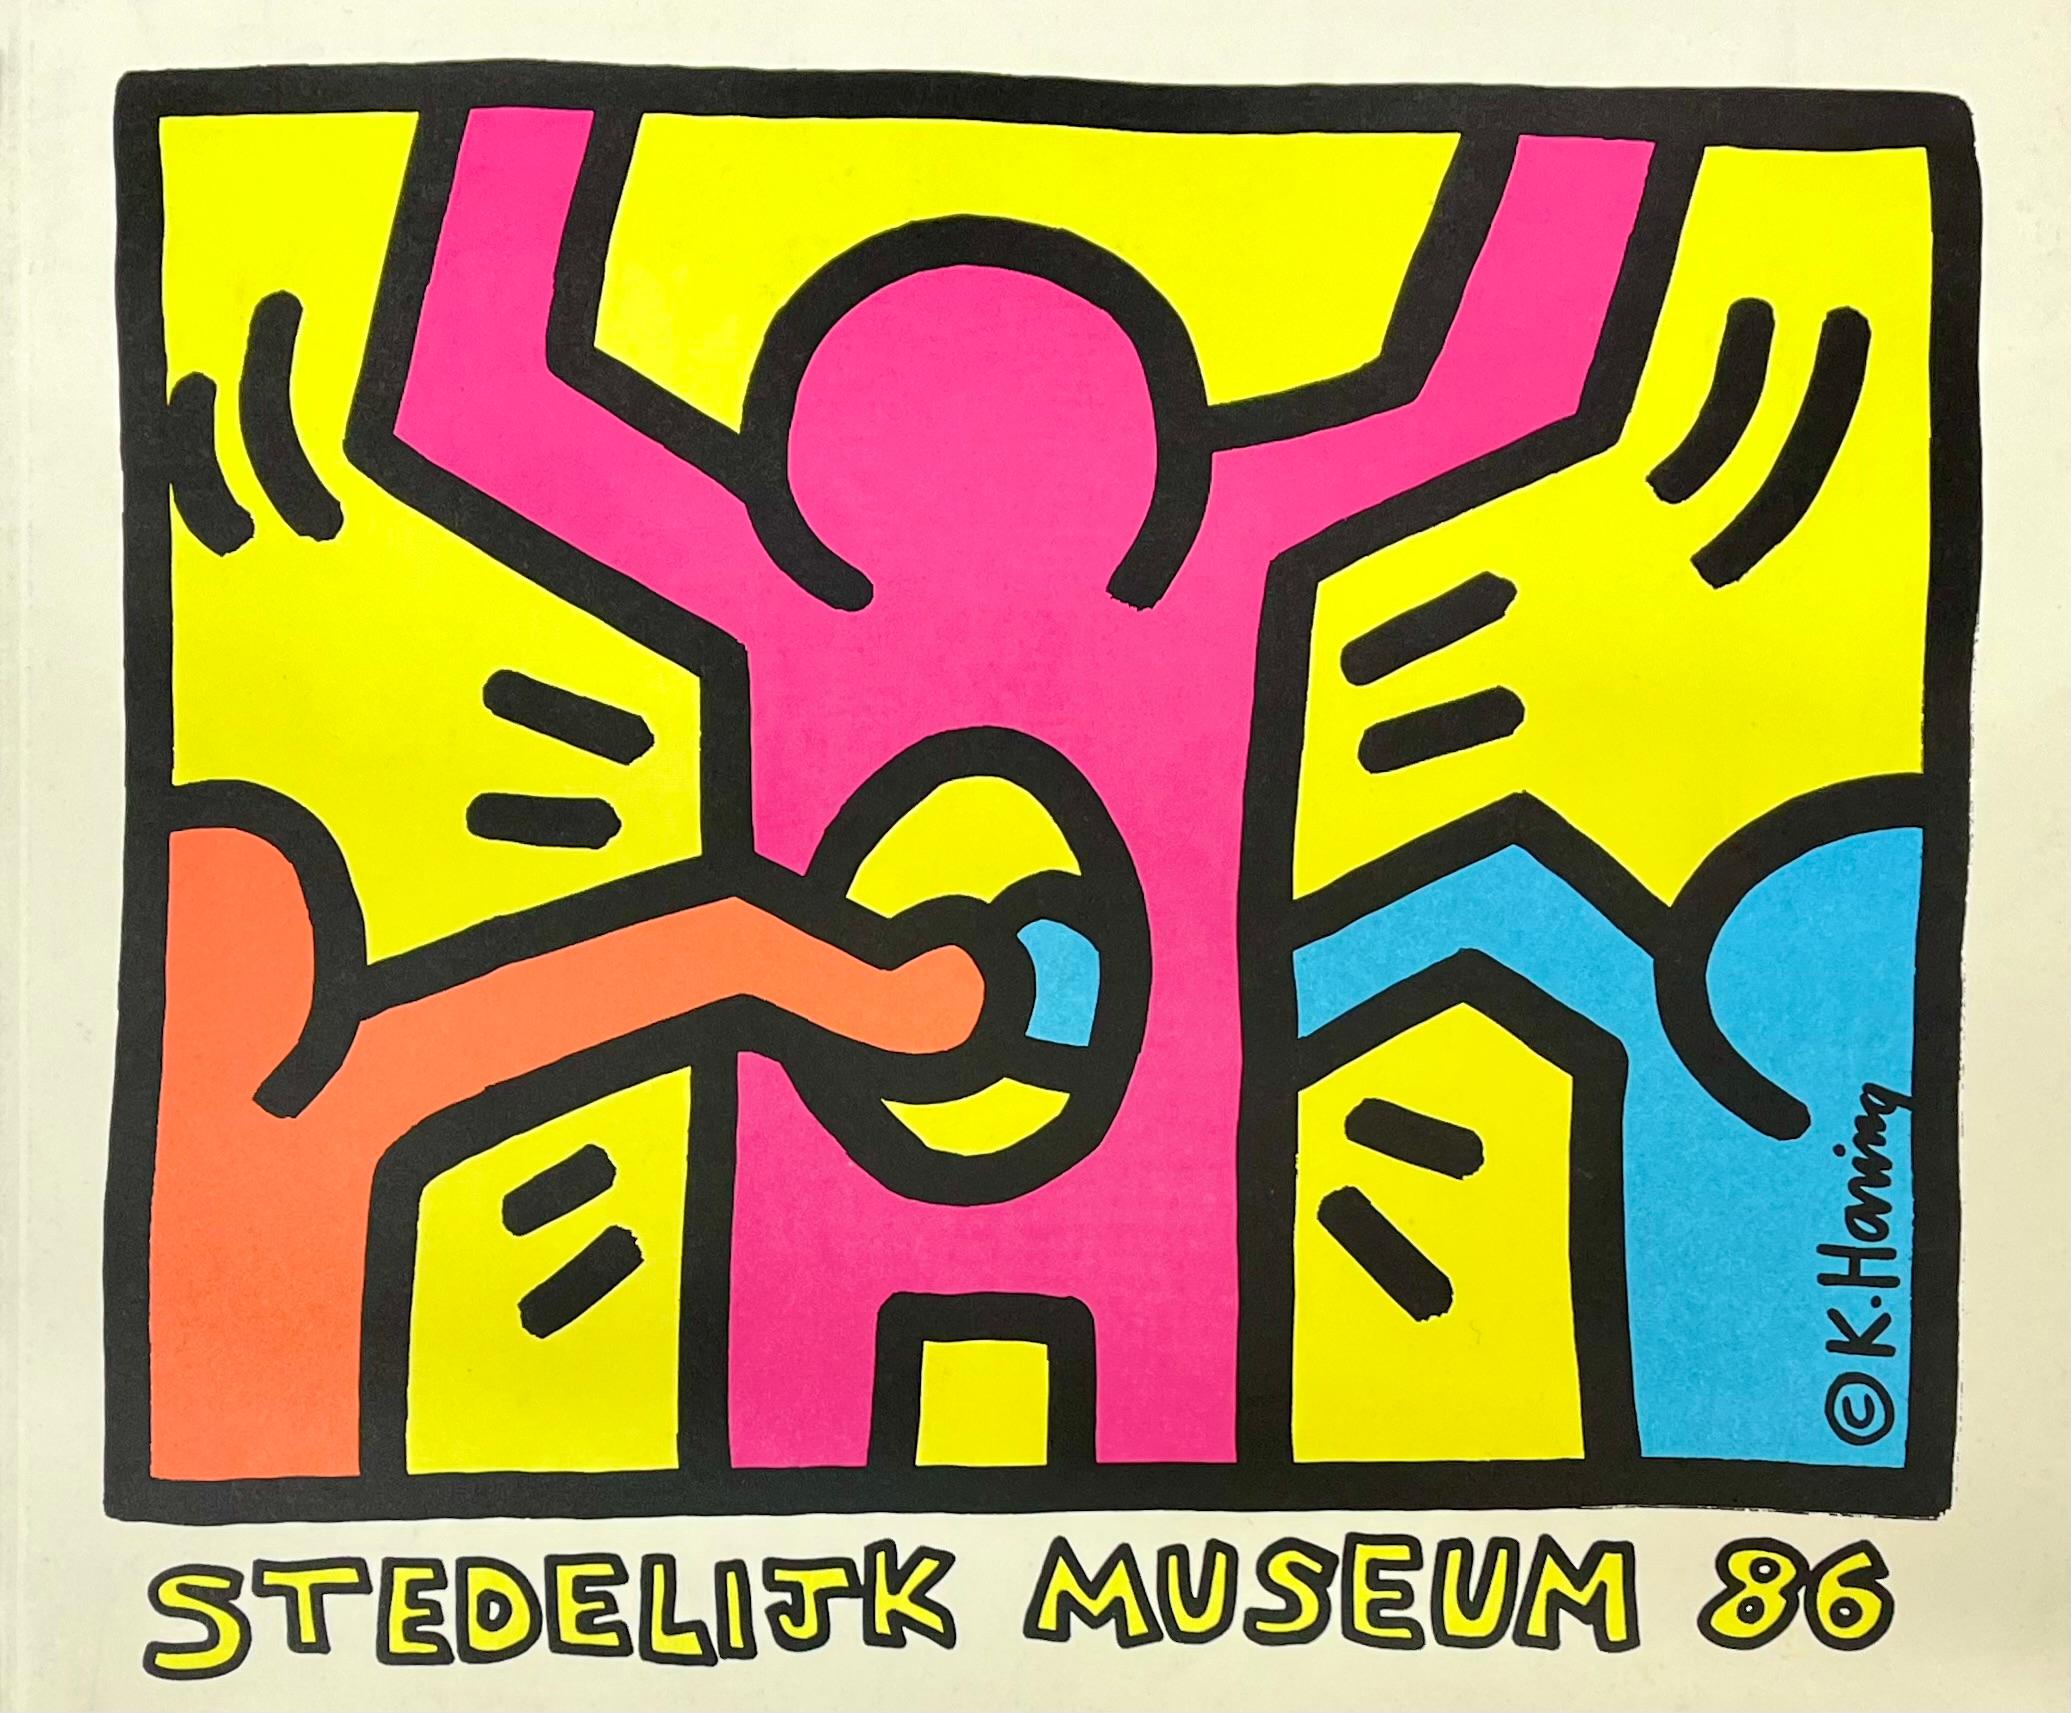 Keith Haring Stedelijk Museum 1986 (catalogue de l'exposition Keith Haring 1986) - Photograph de (after) Keith Haring